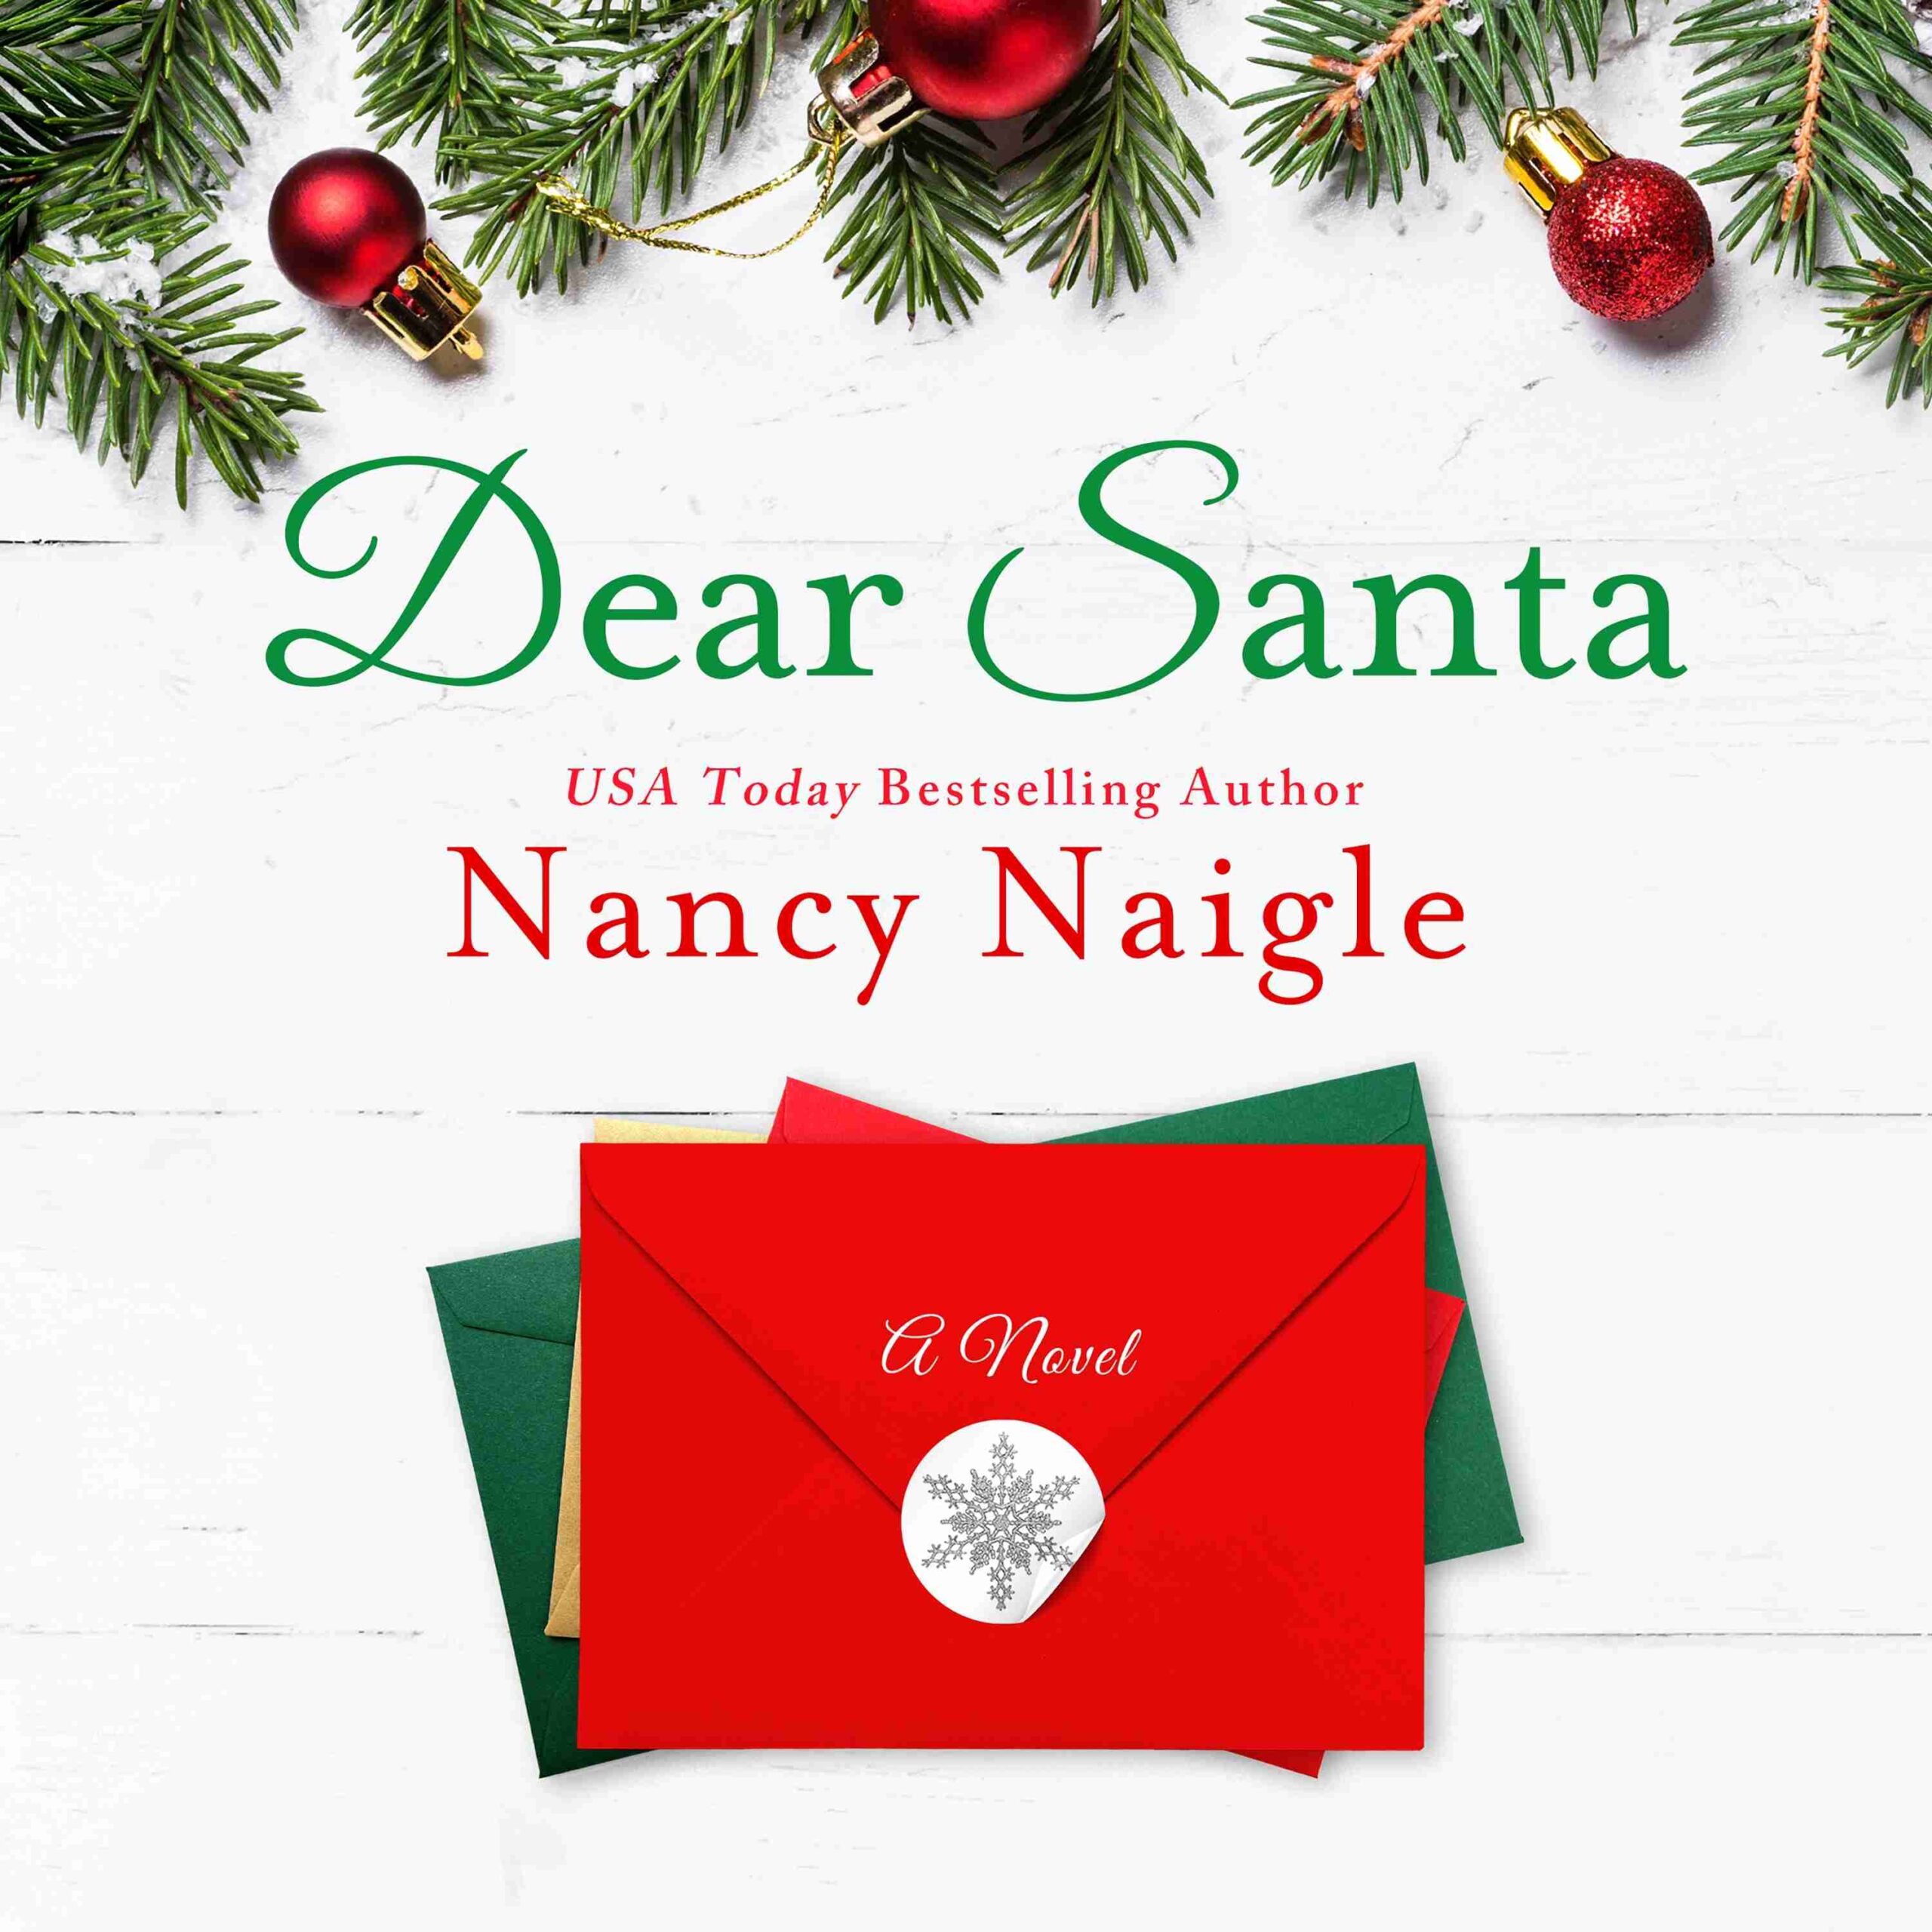 Dear Santa byNancy Naigle Audiobook. 26.99 USD